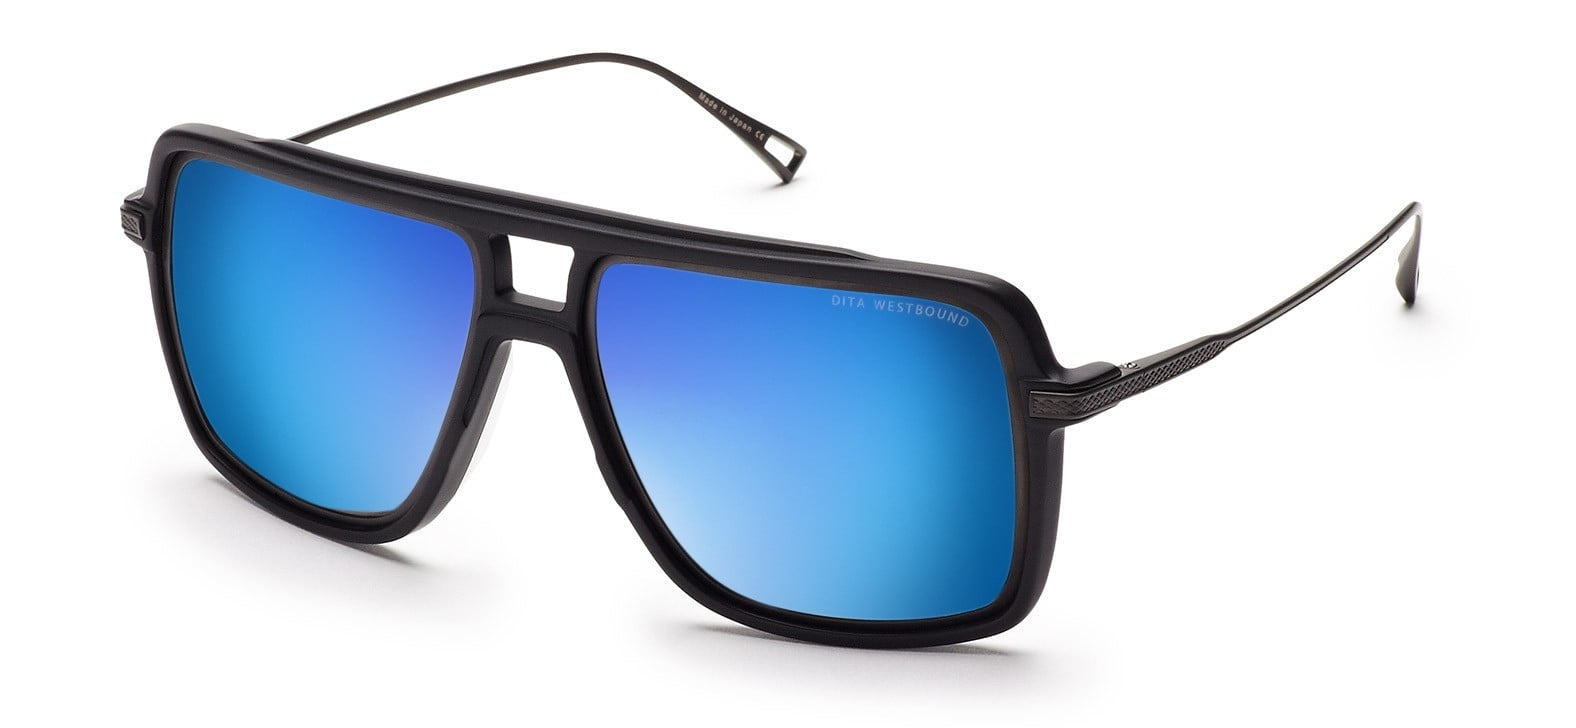 DITA WESTBOUND Matte Grey Tortoise Optique Glasses Eyewear Sunglasses Shade NEW